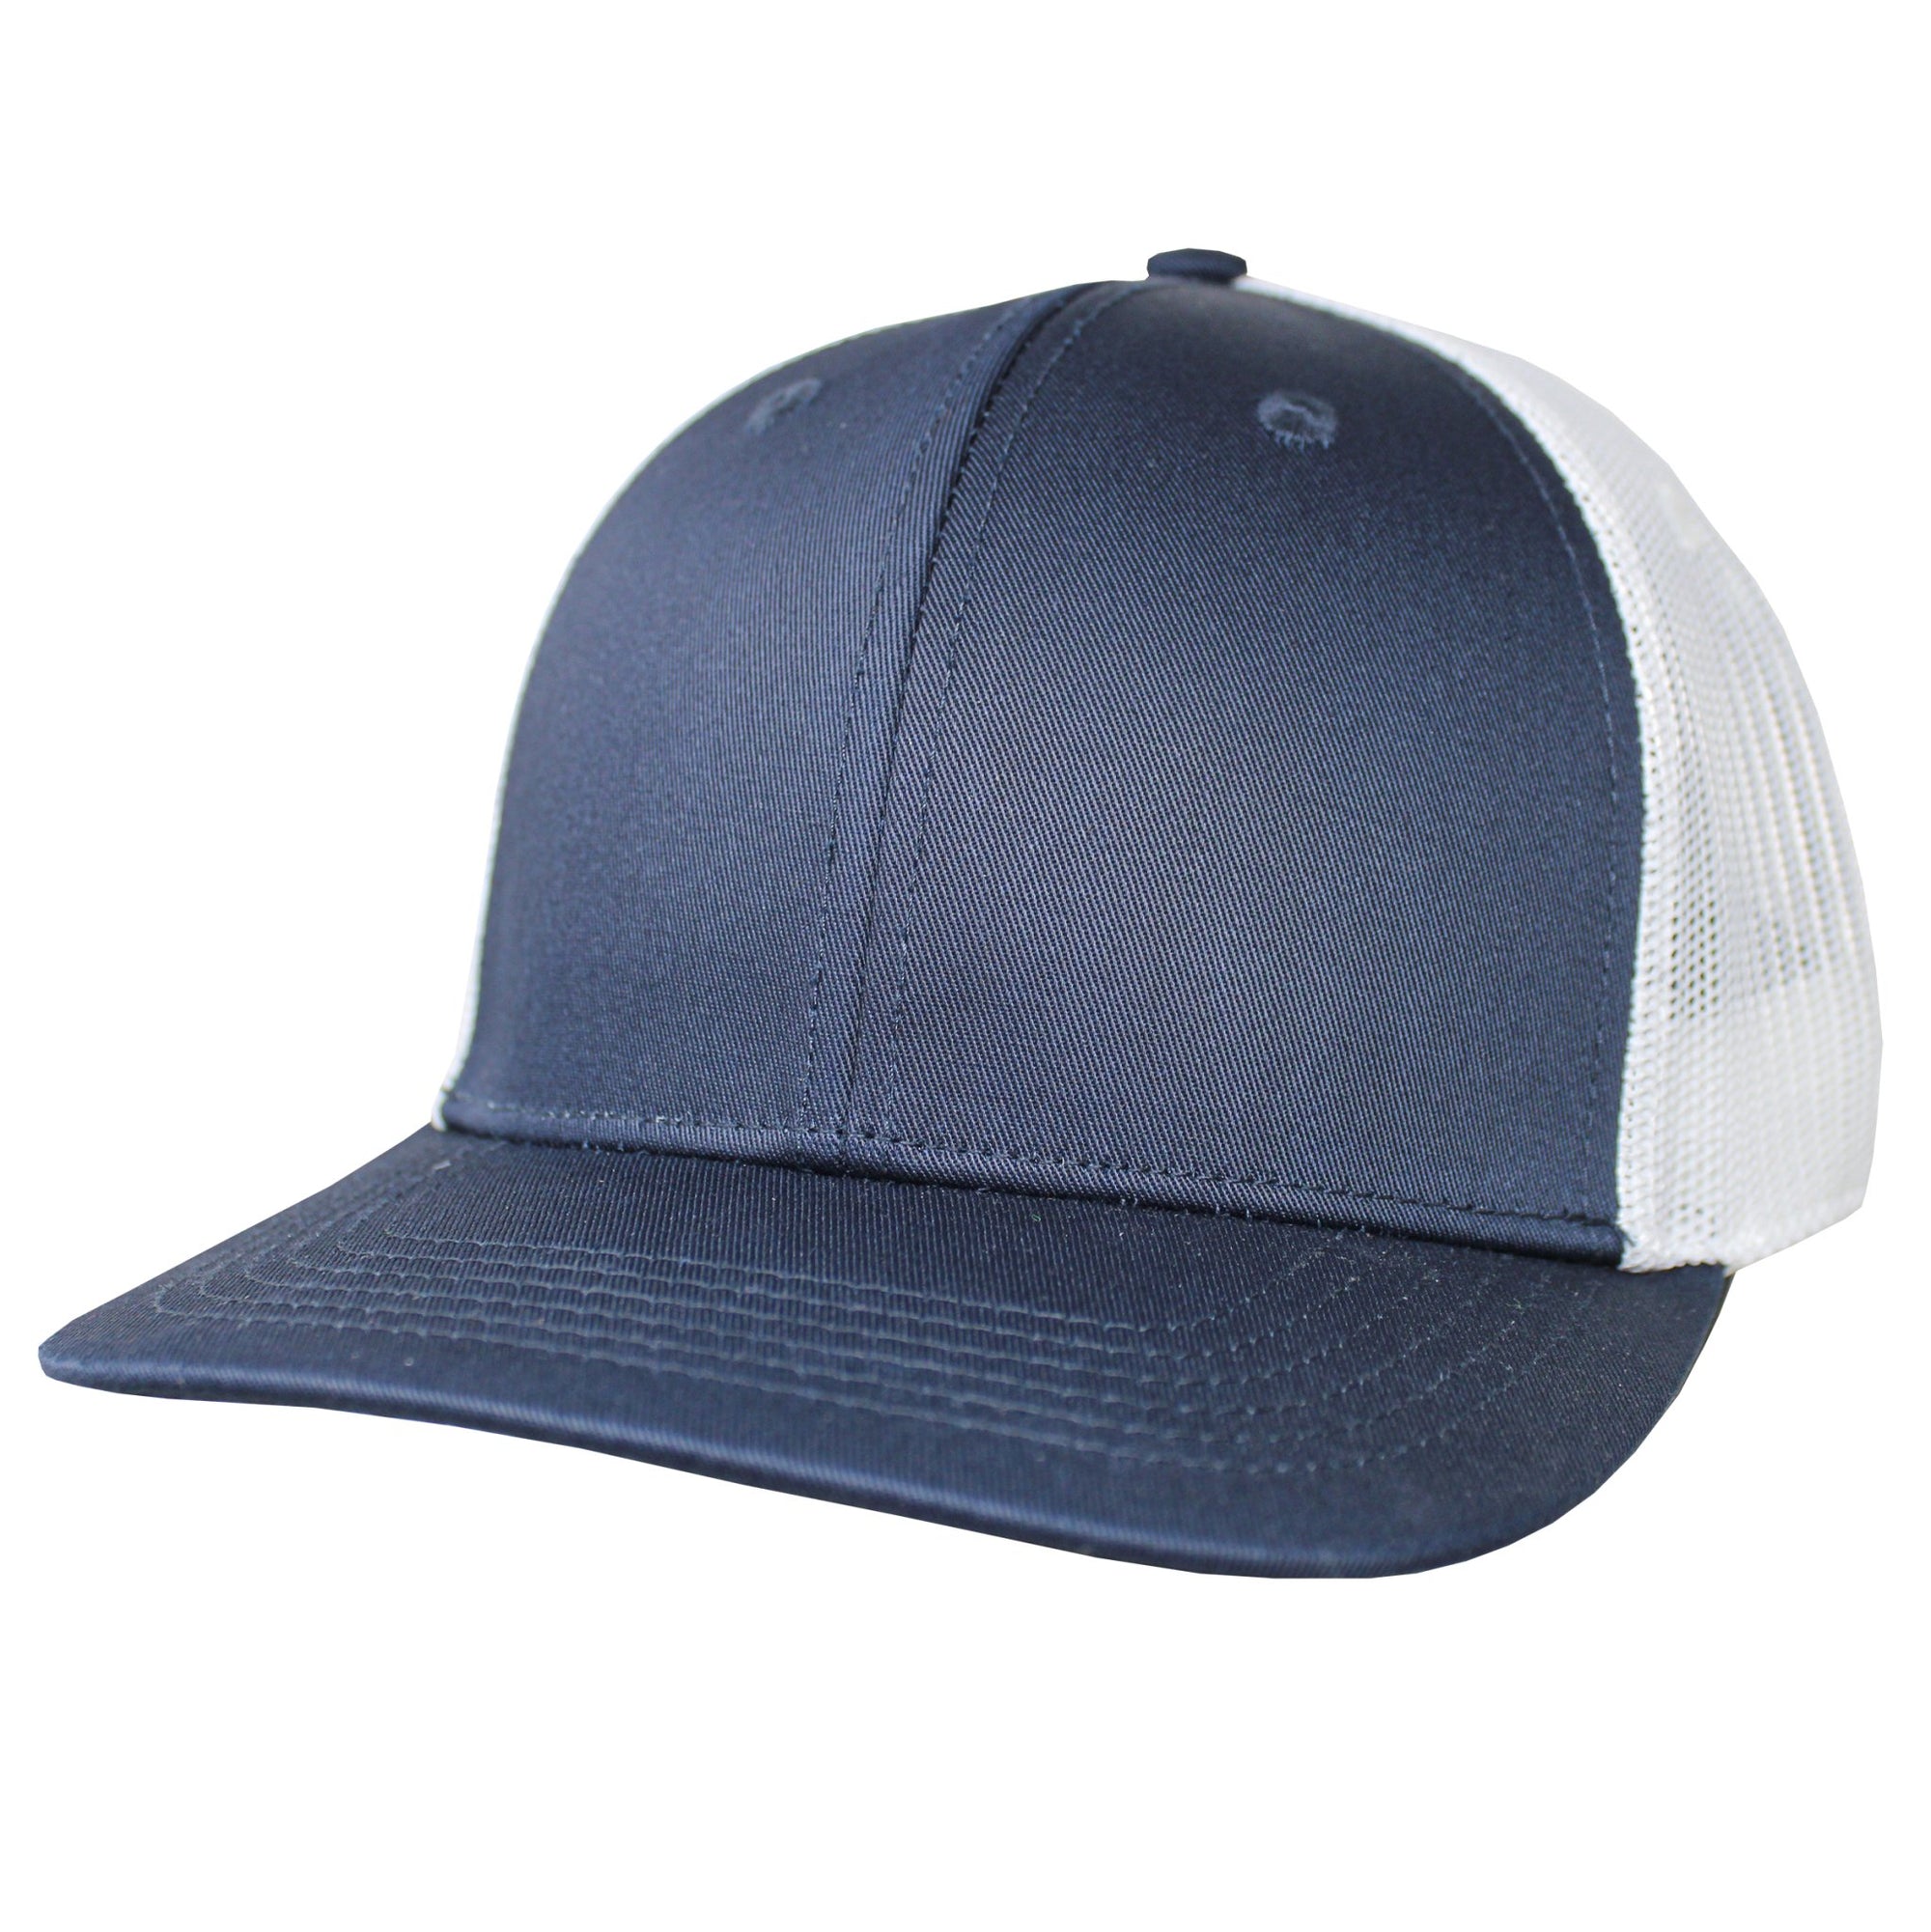 Blank Headwear - BC23 / 6 Panel Performance Trucker Cap - Navy / White - Black Cat MFG - Hat